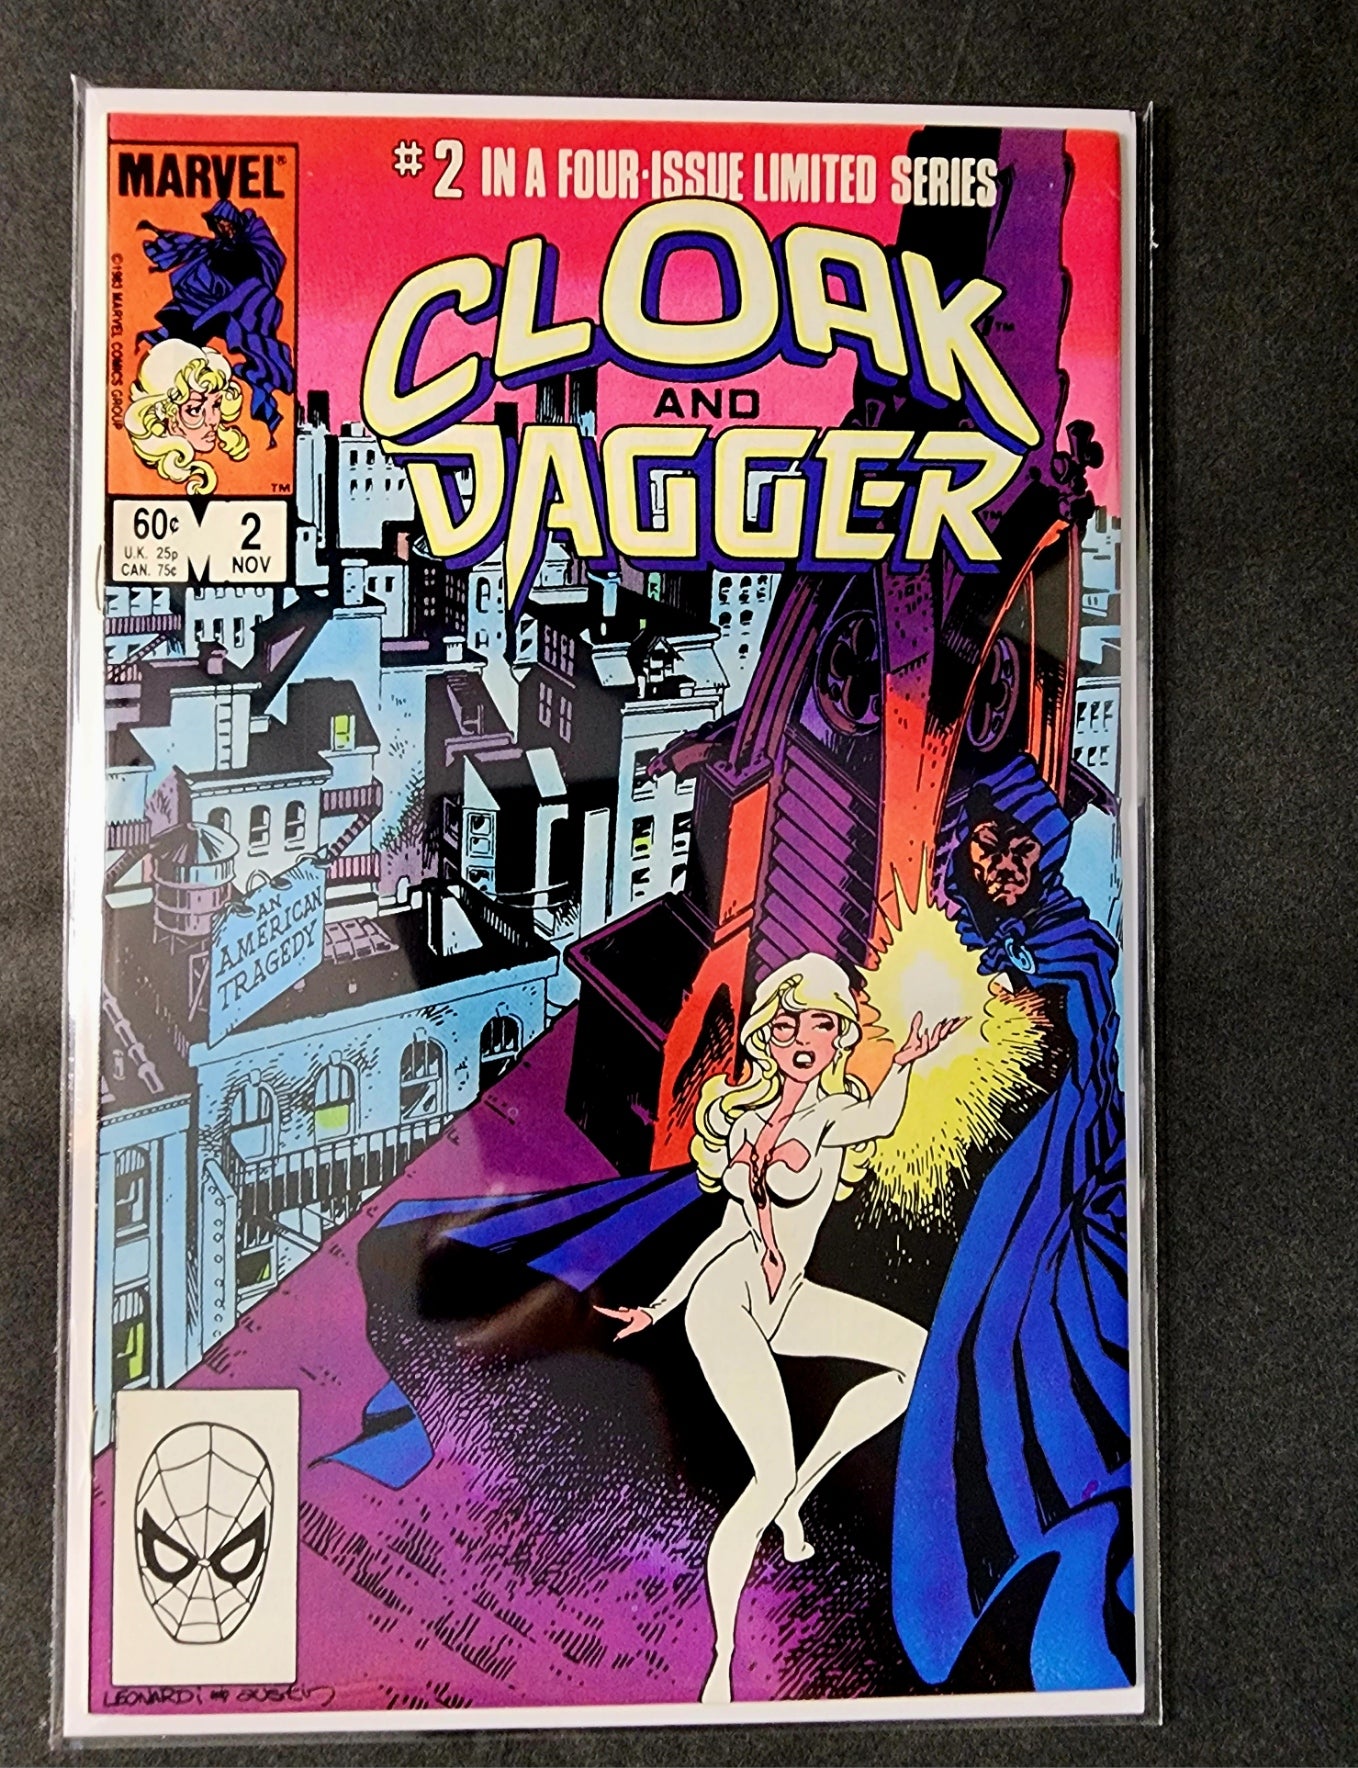 Cloak And Dagger #2 of 4 (VF)